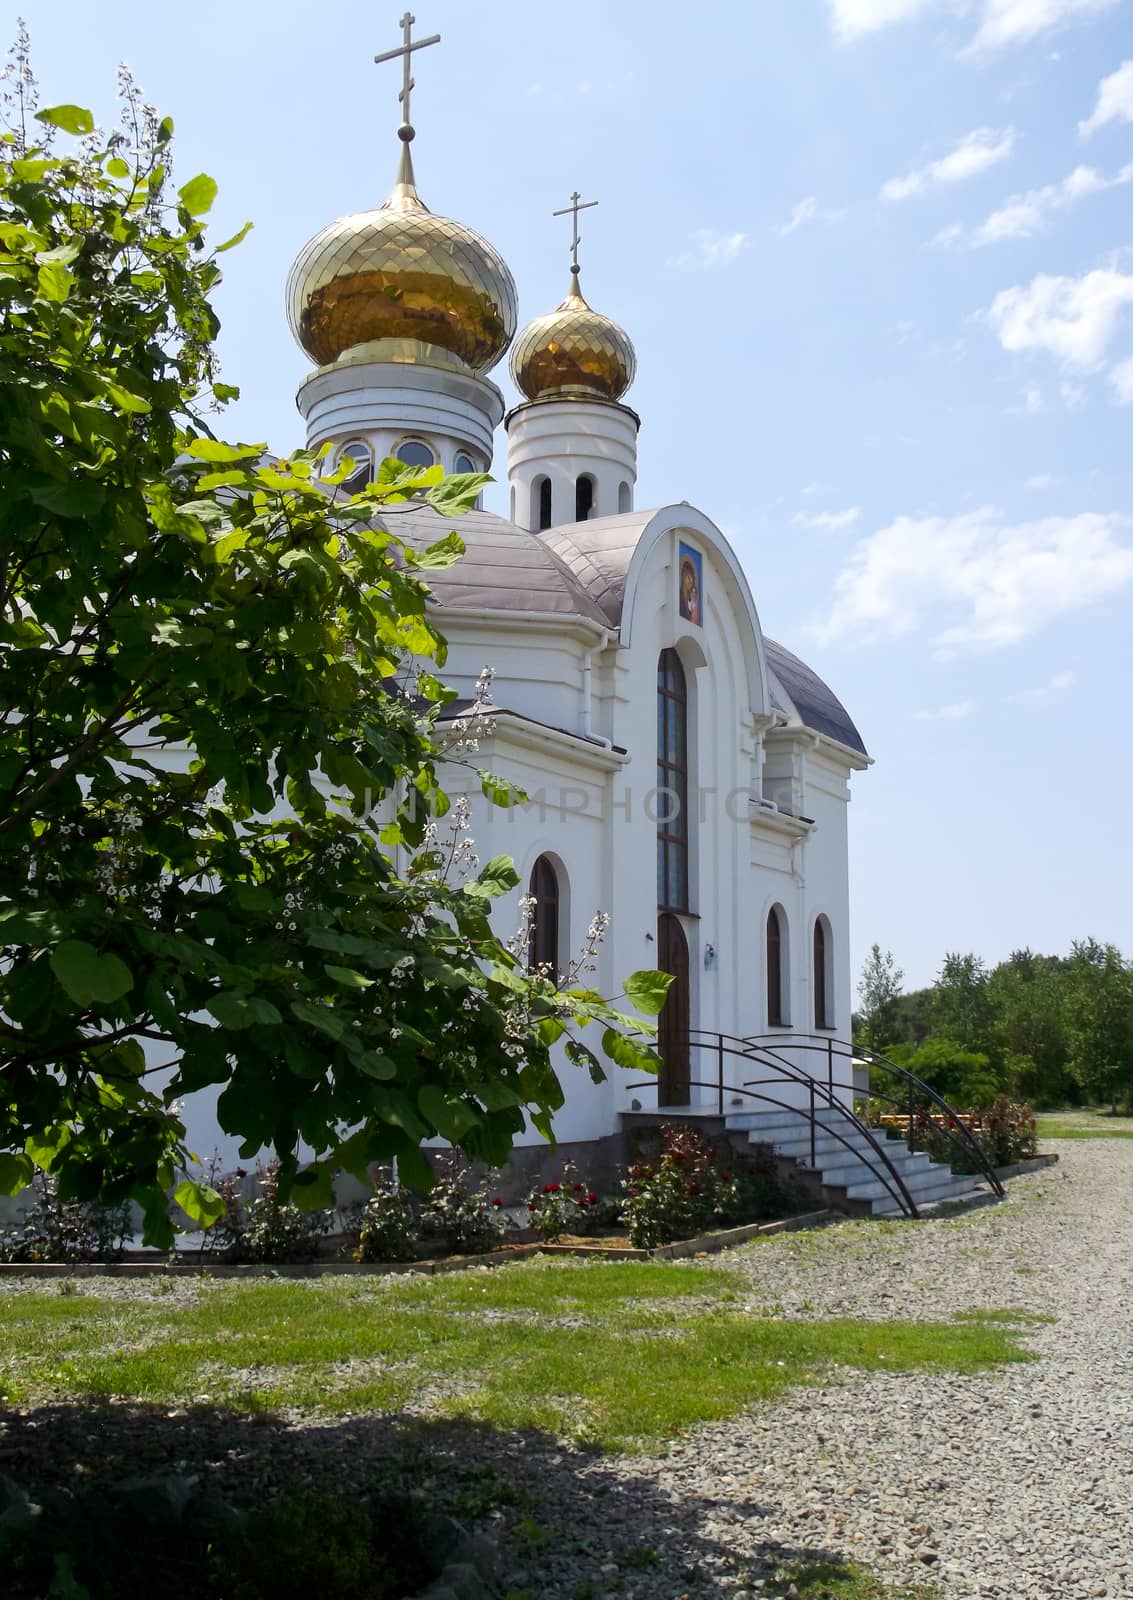 Church with Golden domes by rodakm